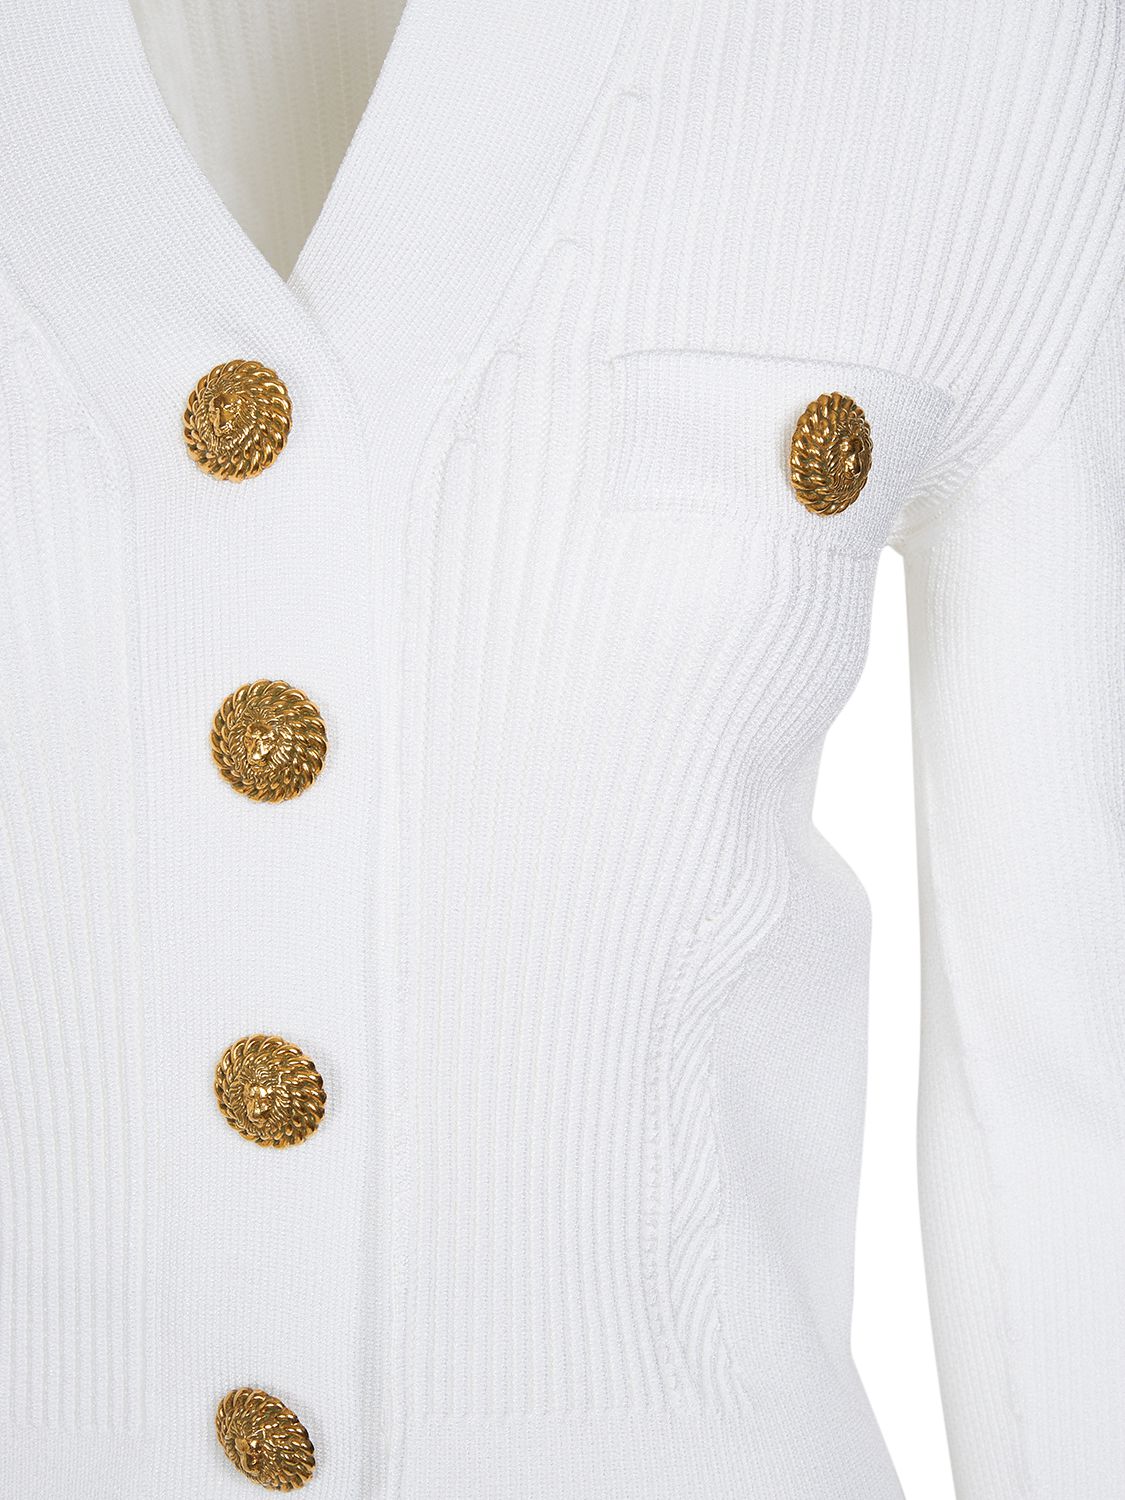 Balmain V-neck button-fastening cardigan - White